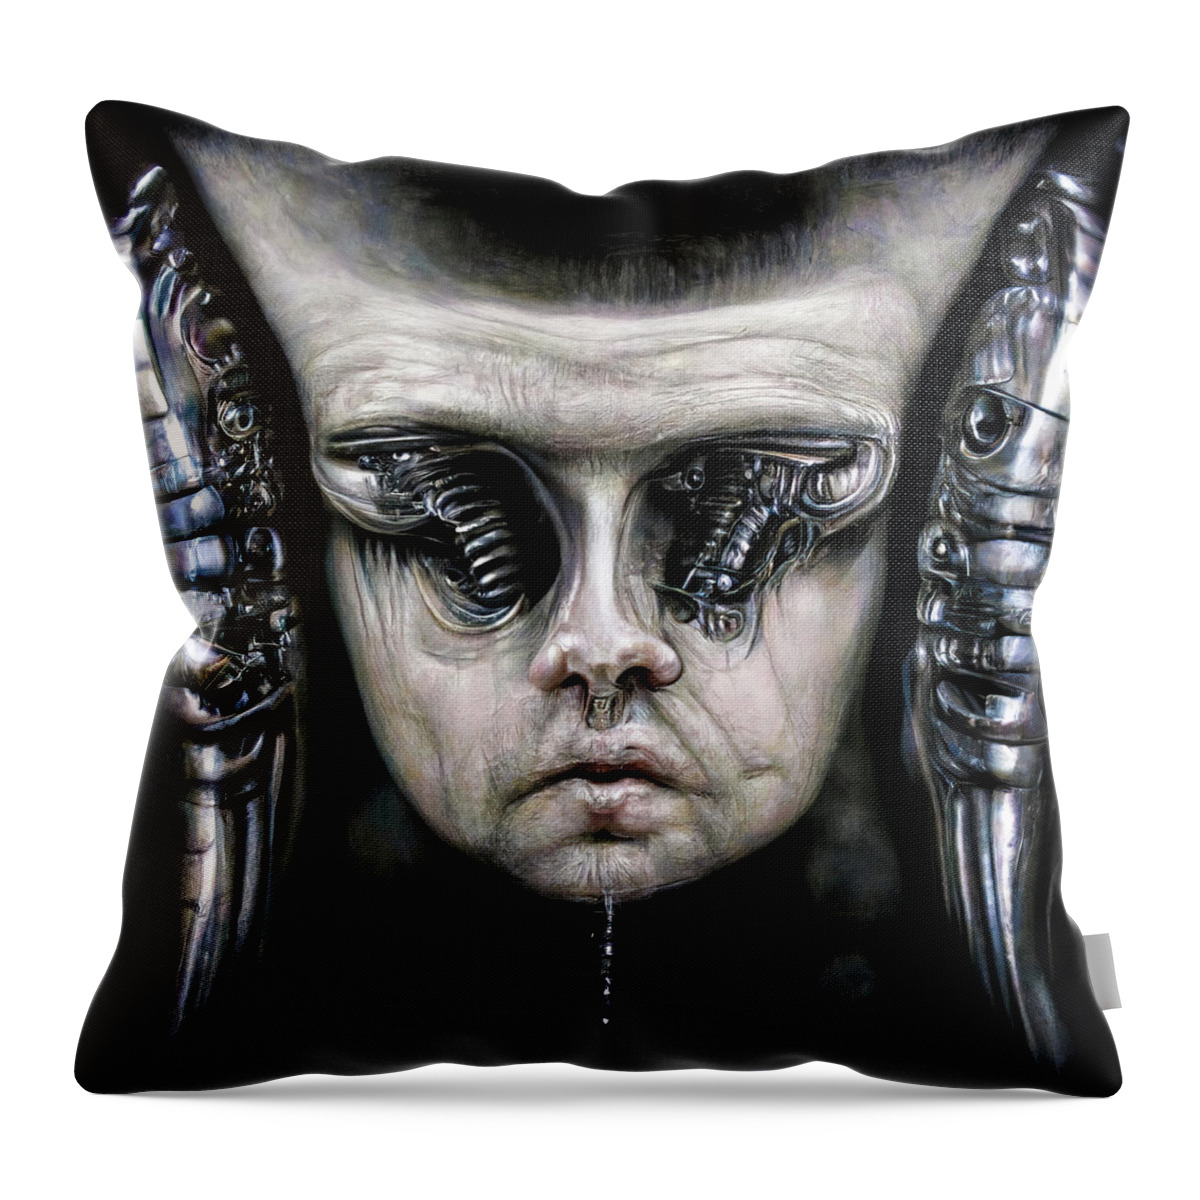 Cyborg Throw Pillow featuring the digital art Surreal Art 10 Cyborg Portrait by Matthias Hauser